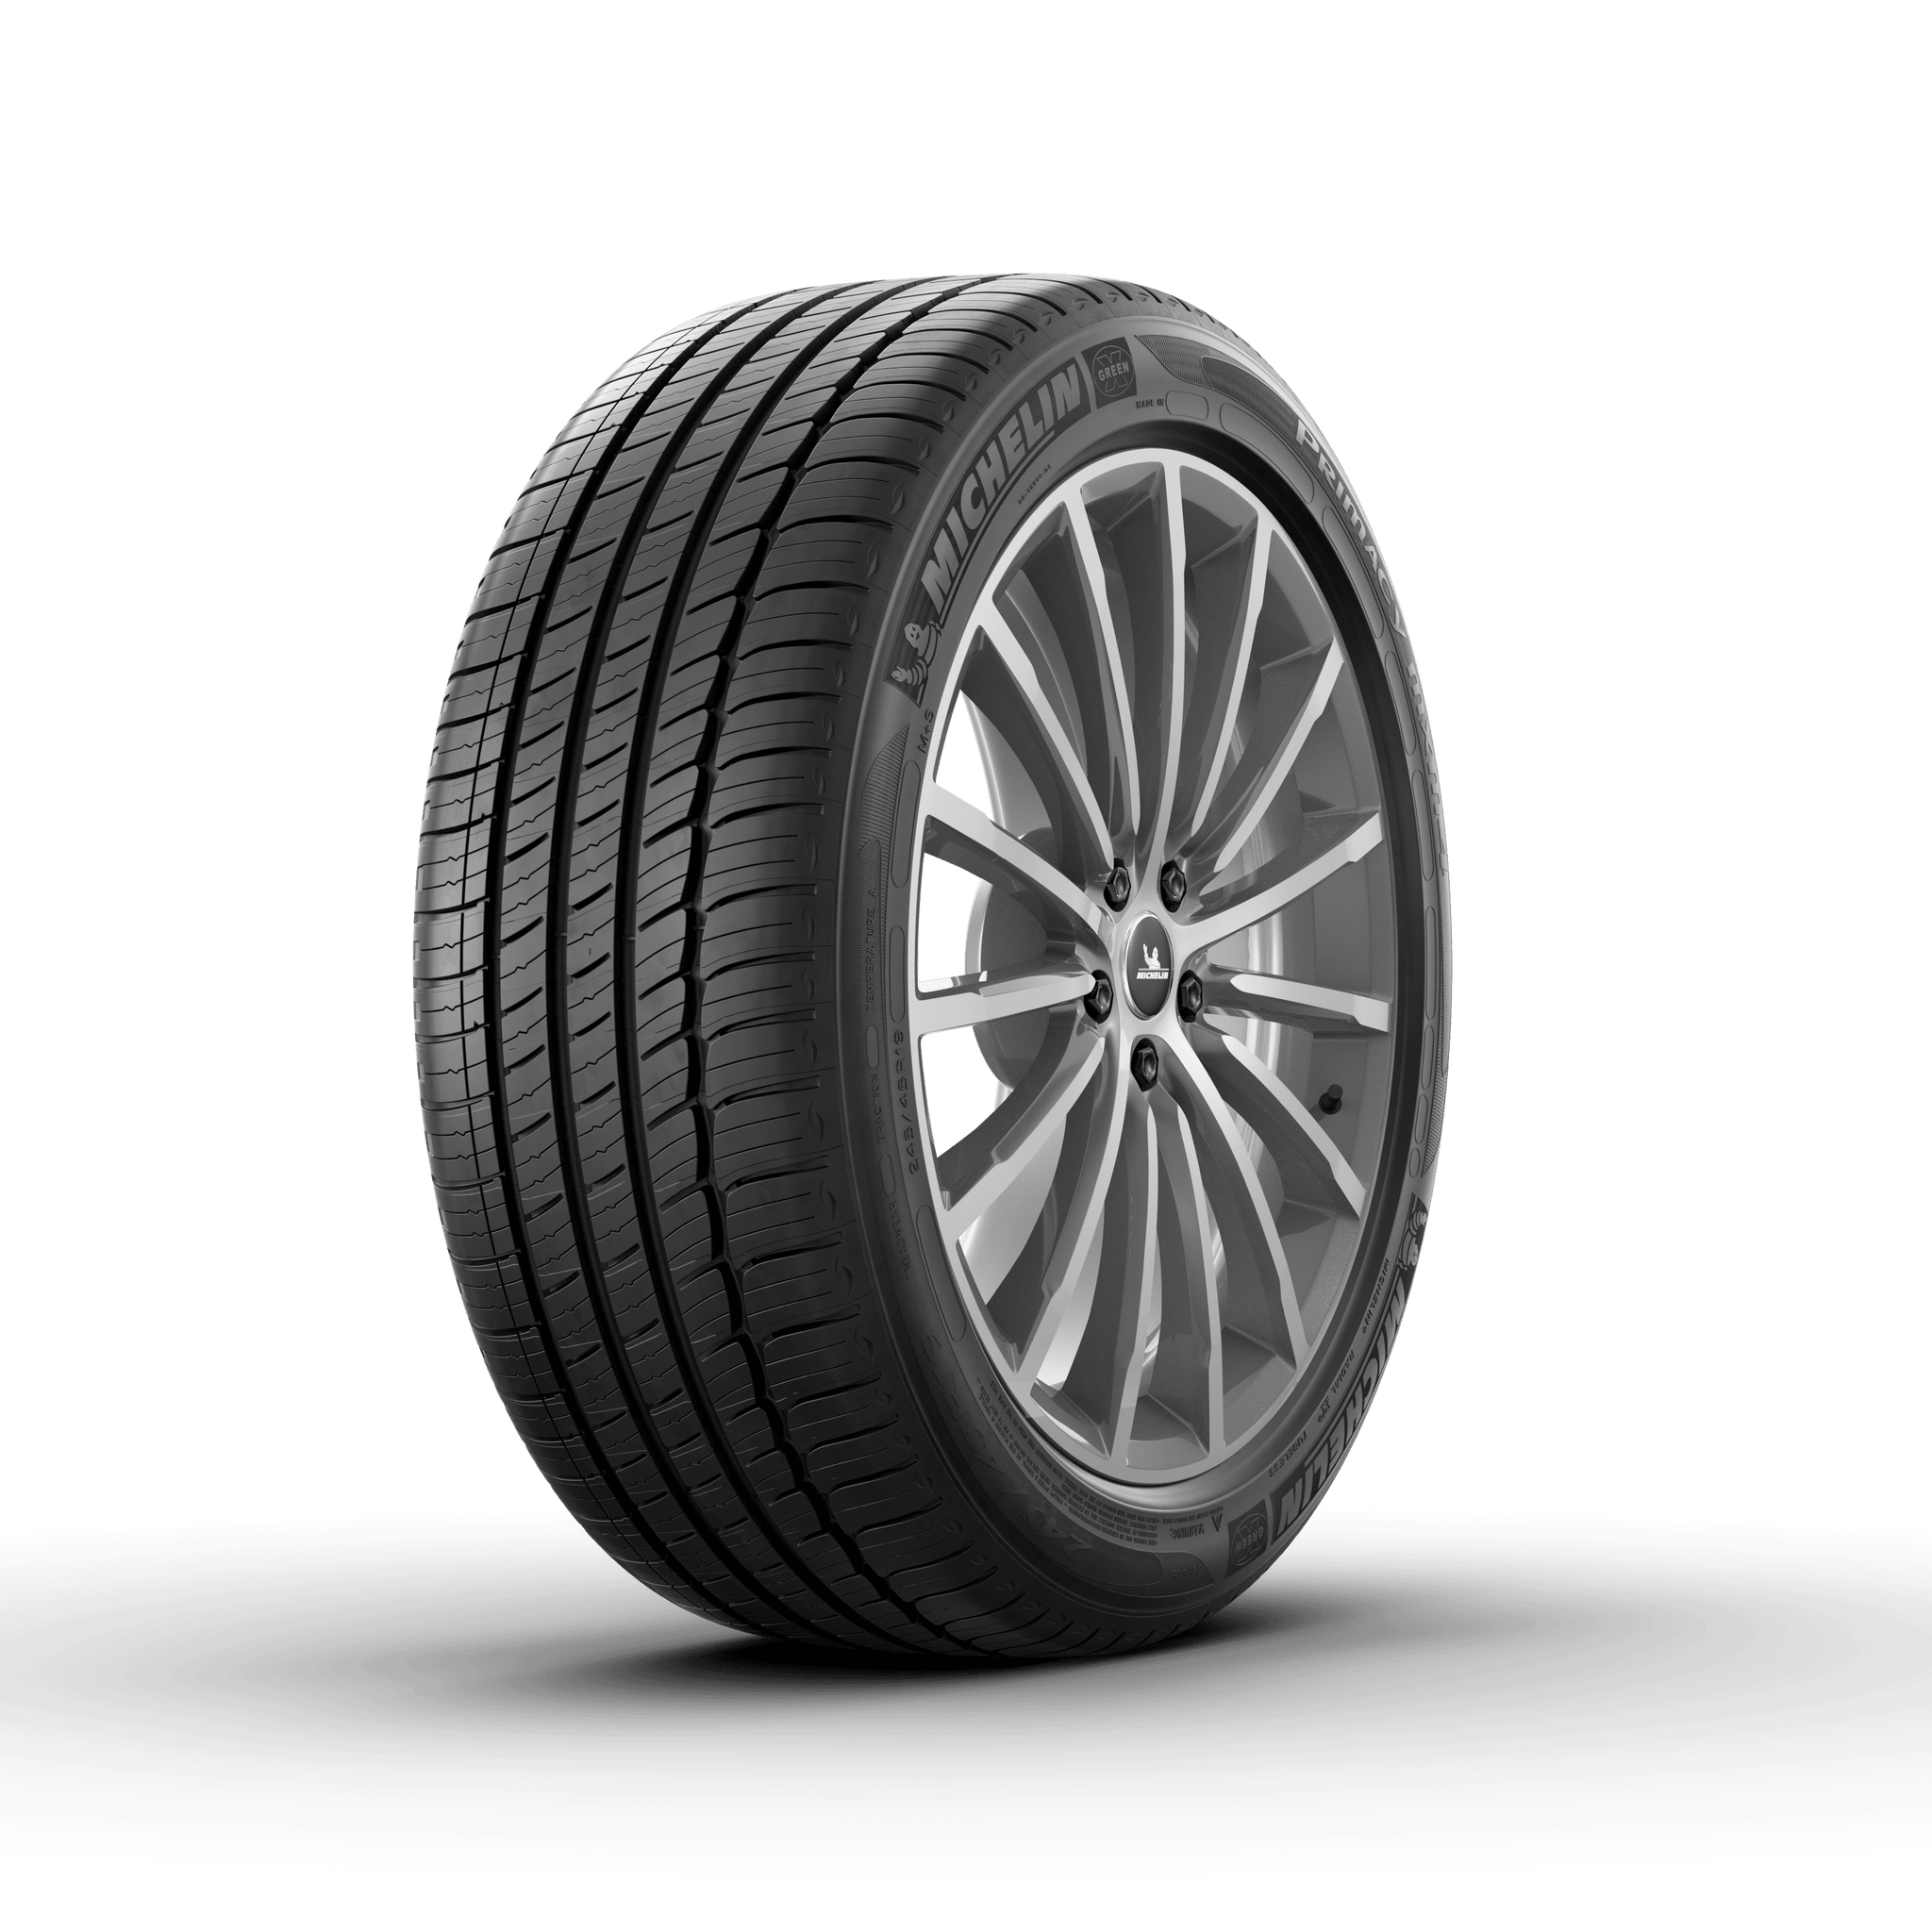 MICHELIN PRIMACY MXM4 225/60R18 (28.6X8.9R 18) Tires